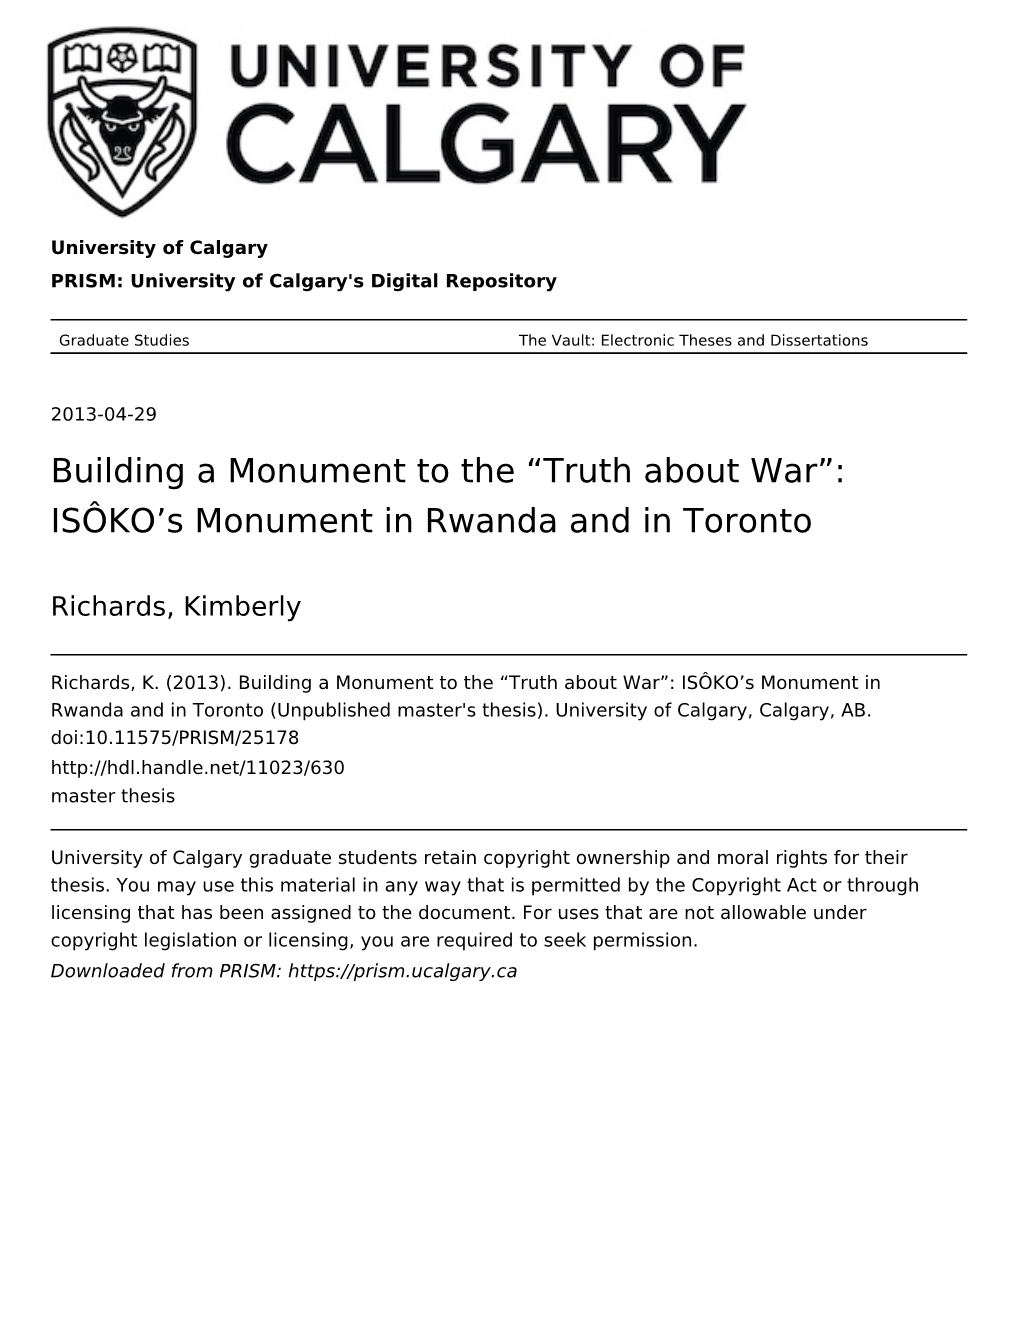 ISÔKO's Monument in Rwanda and in Toronto